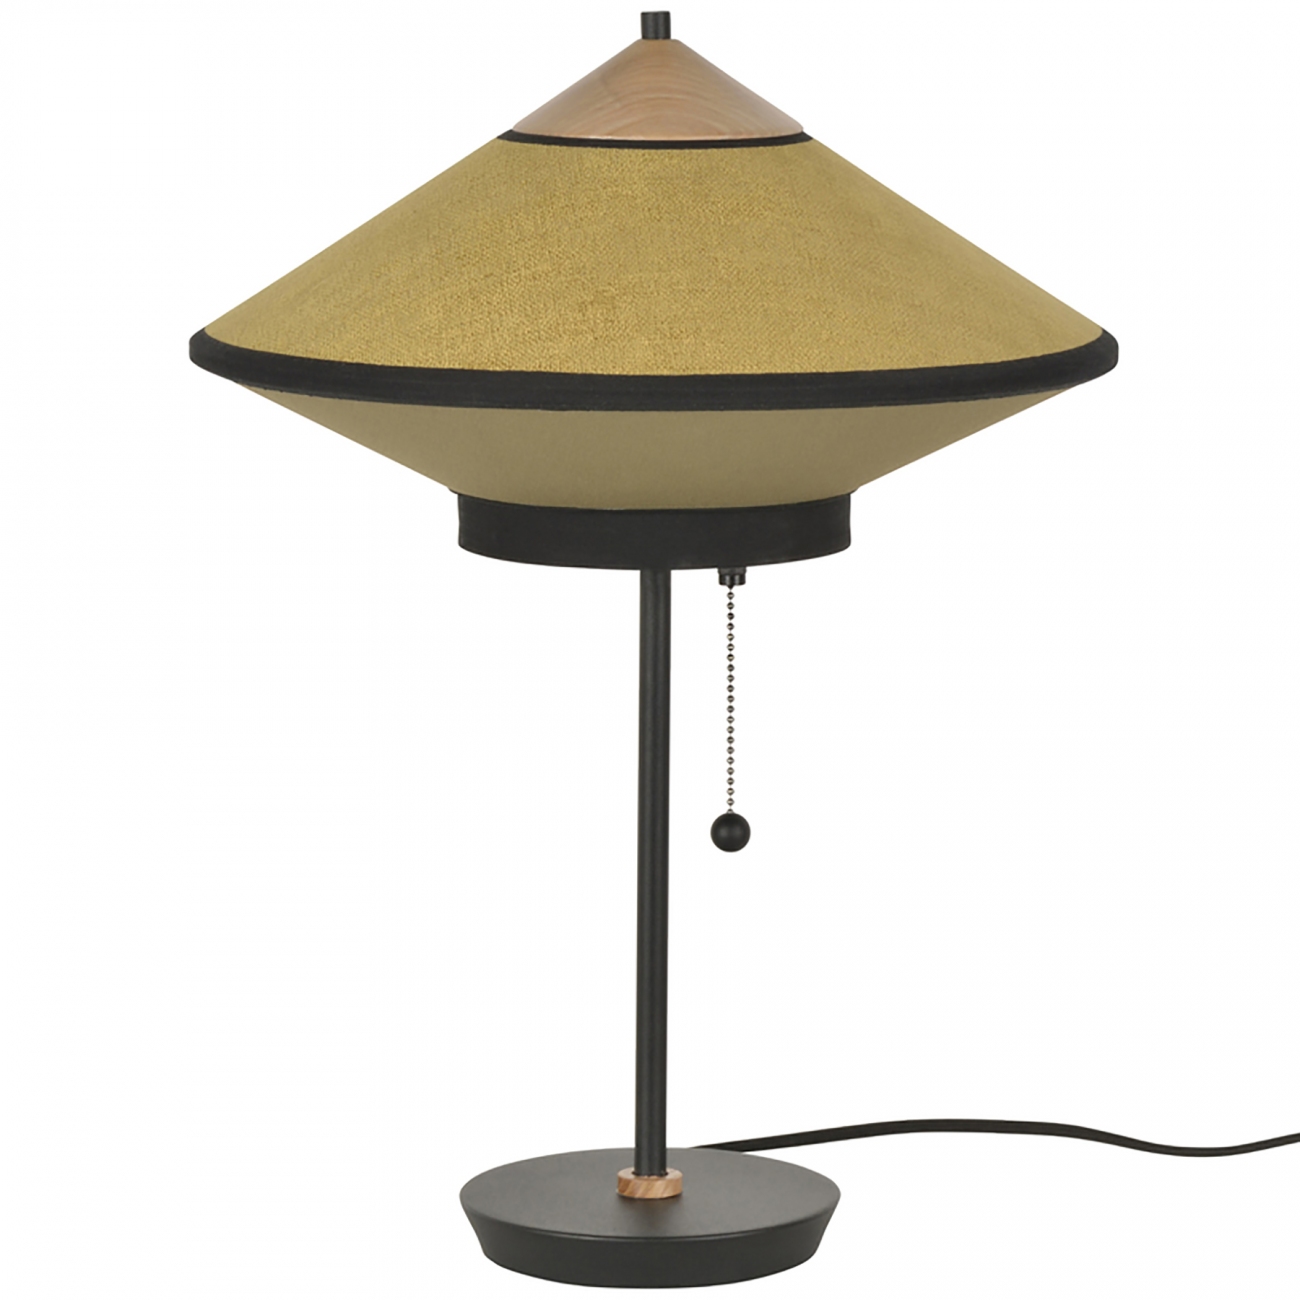 Forestier Paris Cymbal lampada da tavolo